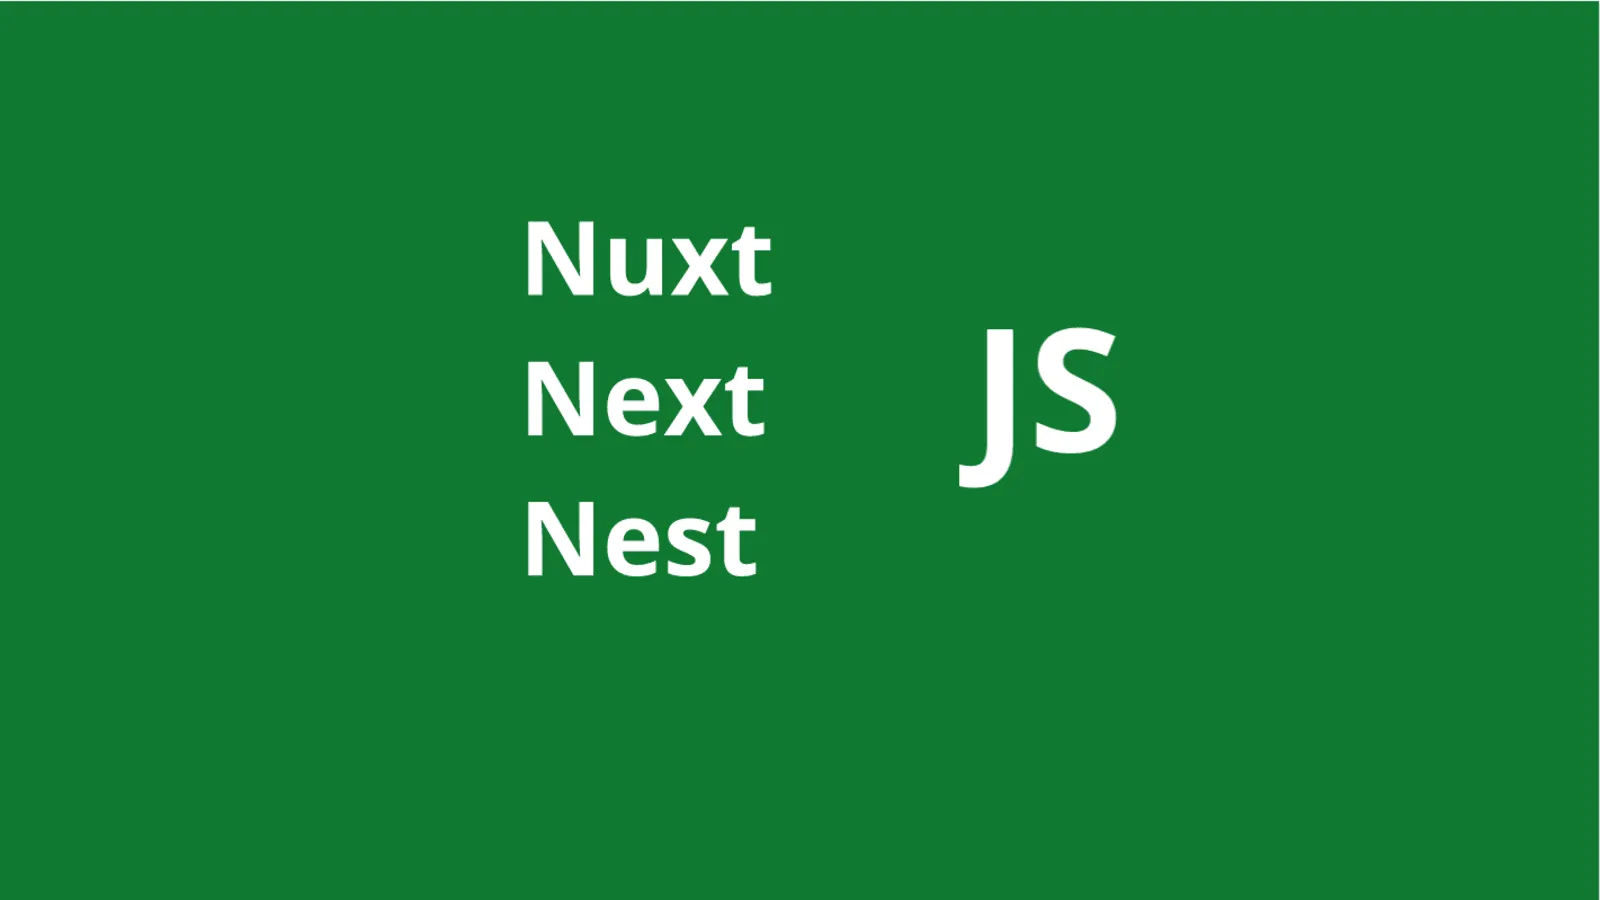 Nuxt, Next, Nest! Confused?